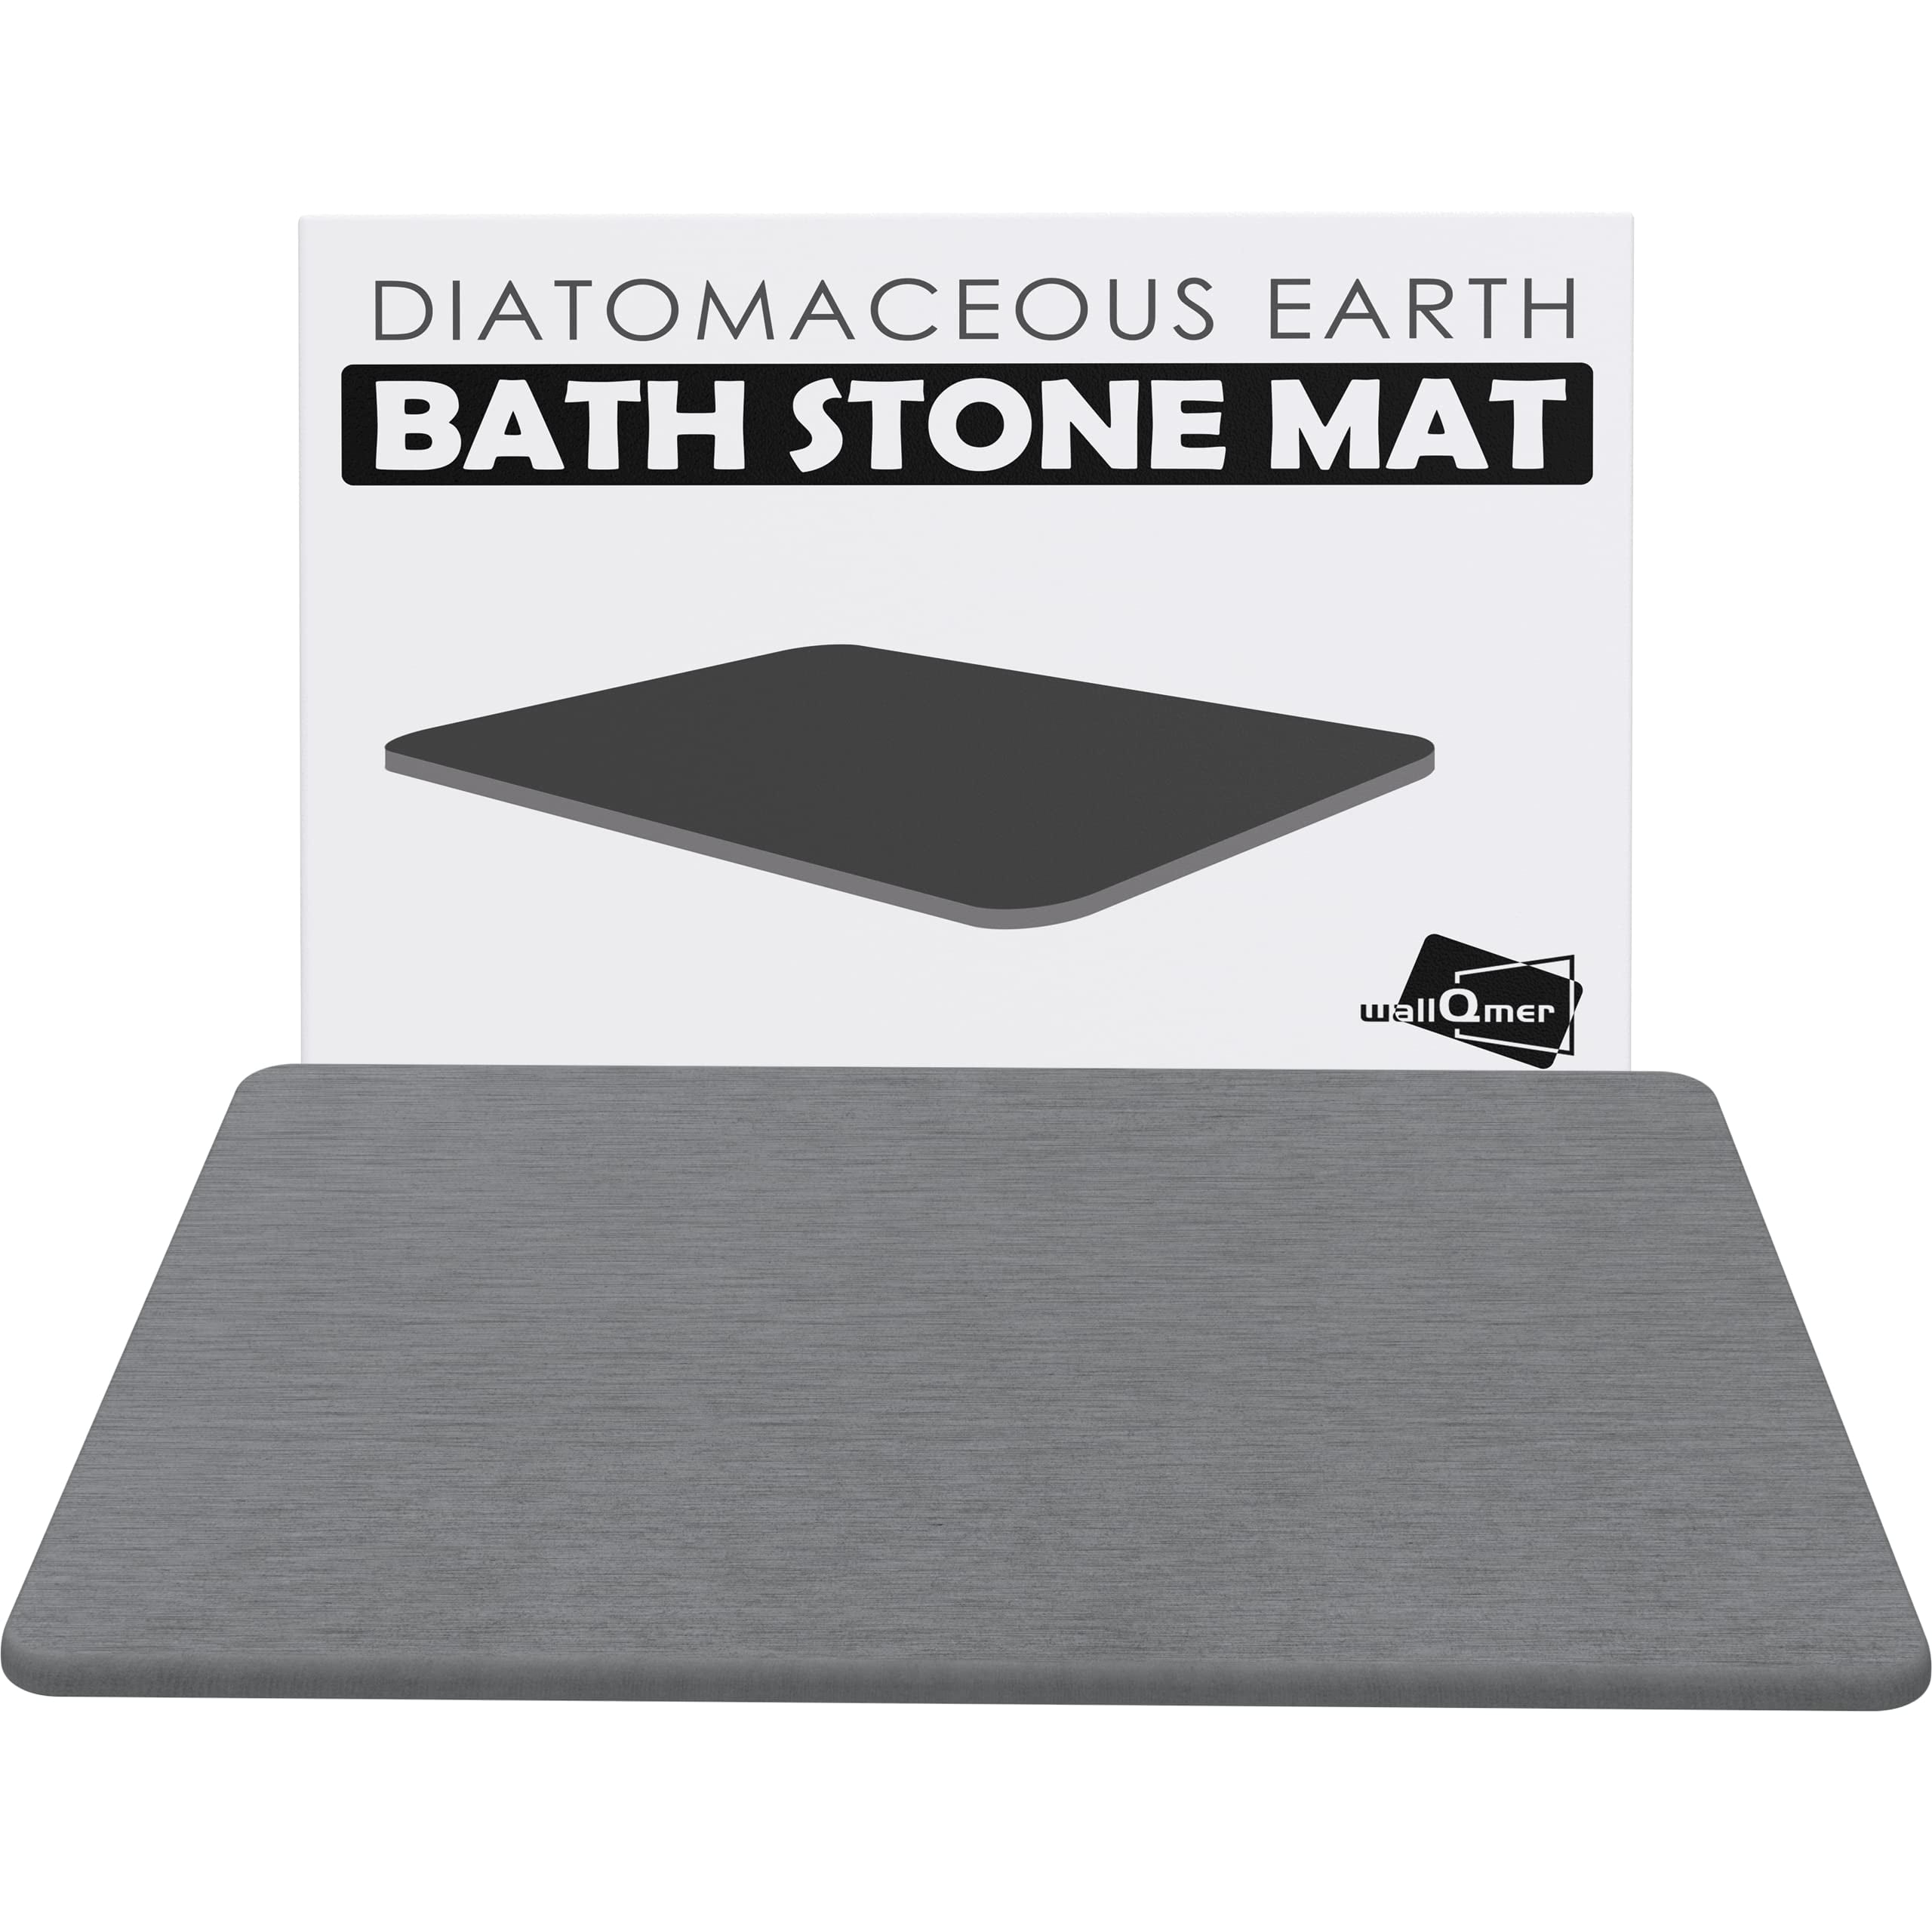 Layameis Stone Bath Mat, Diatomaceous Earth Shower Mat, Fast Drying Mat for  Bathroom, Non-Slip Super Absorbent Quick Drying Bathroom Floor Mat, Bath